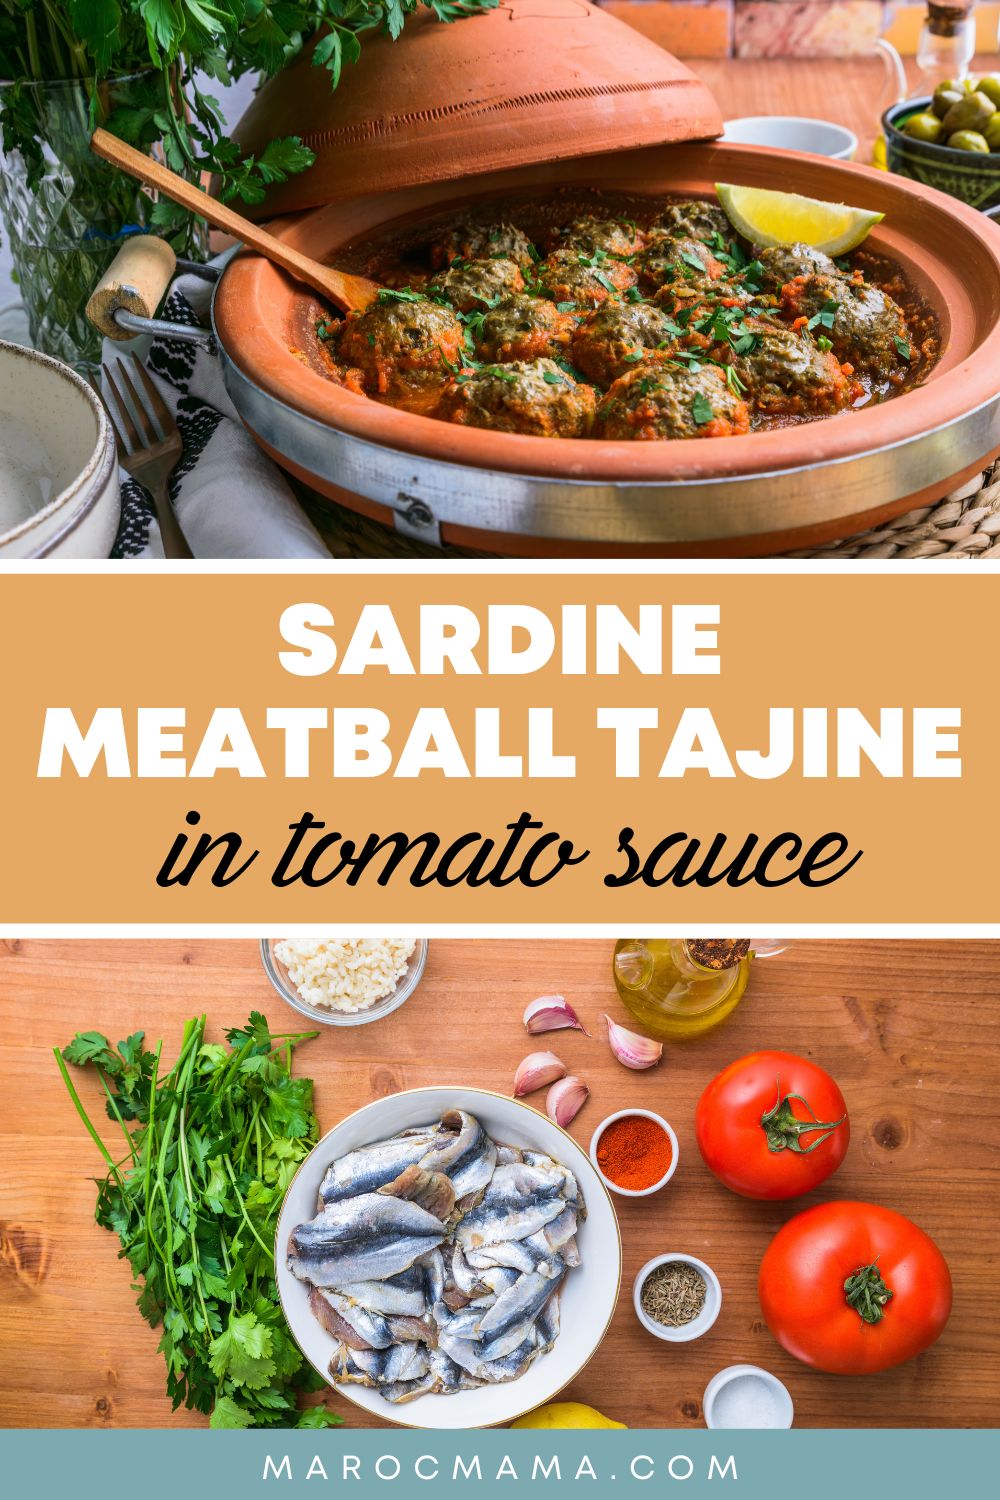 Simple Sardine Meatball Tajine in Tomato Sauce